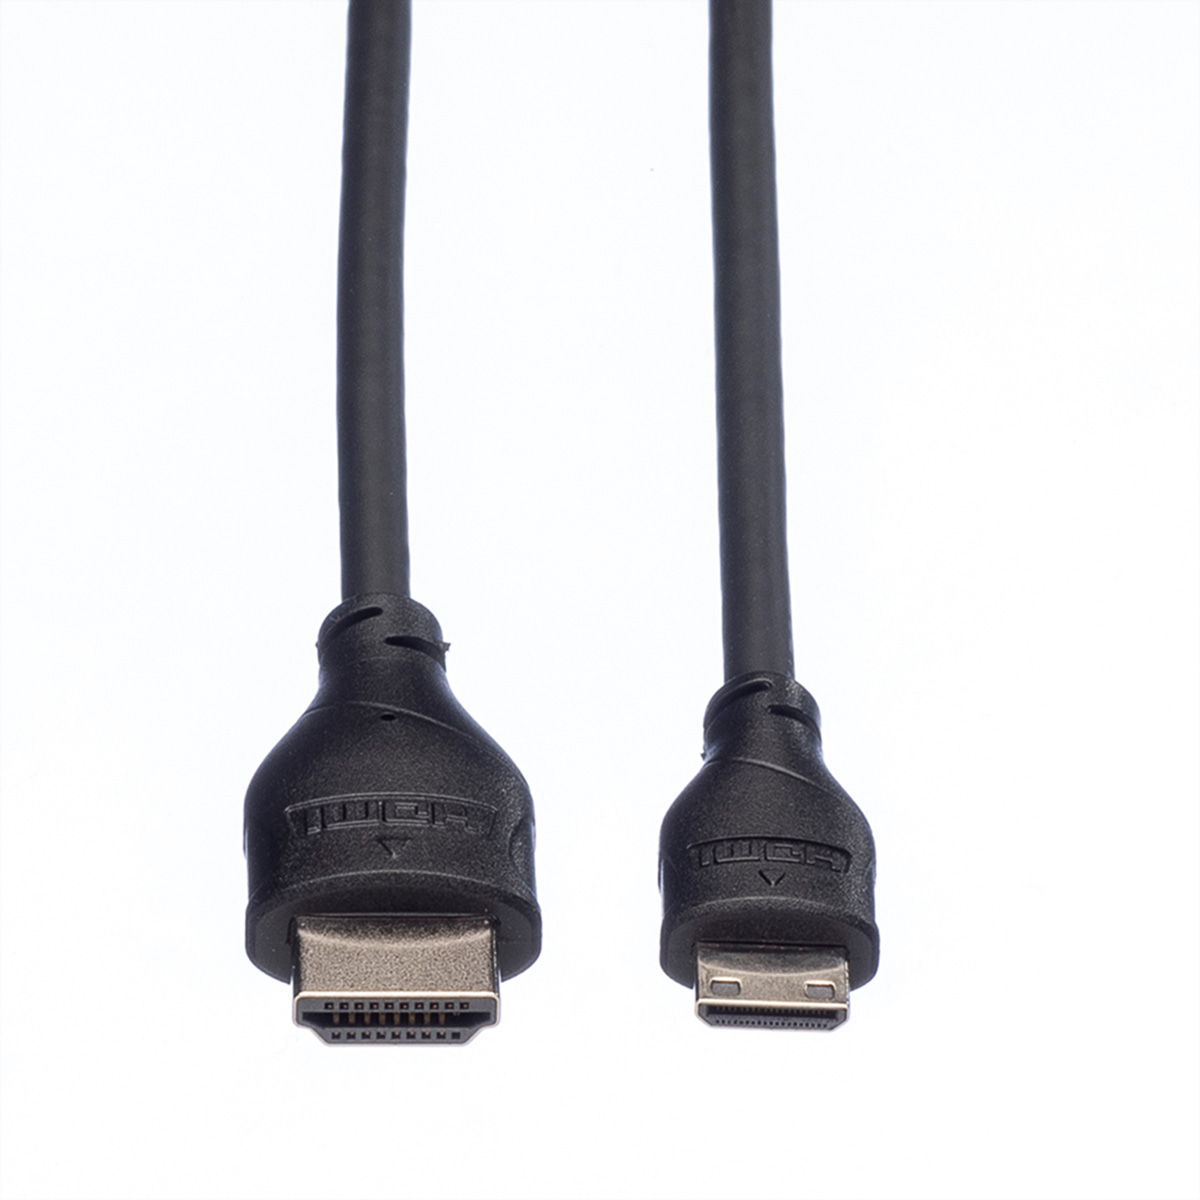 HDMI High Ethernet Mini Kabel - High Mini Speed HDMI Ethernet, ROLINE HDMI mit ST ST HDMI Kabel with Speed